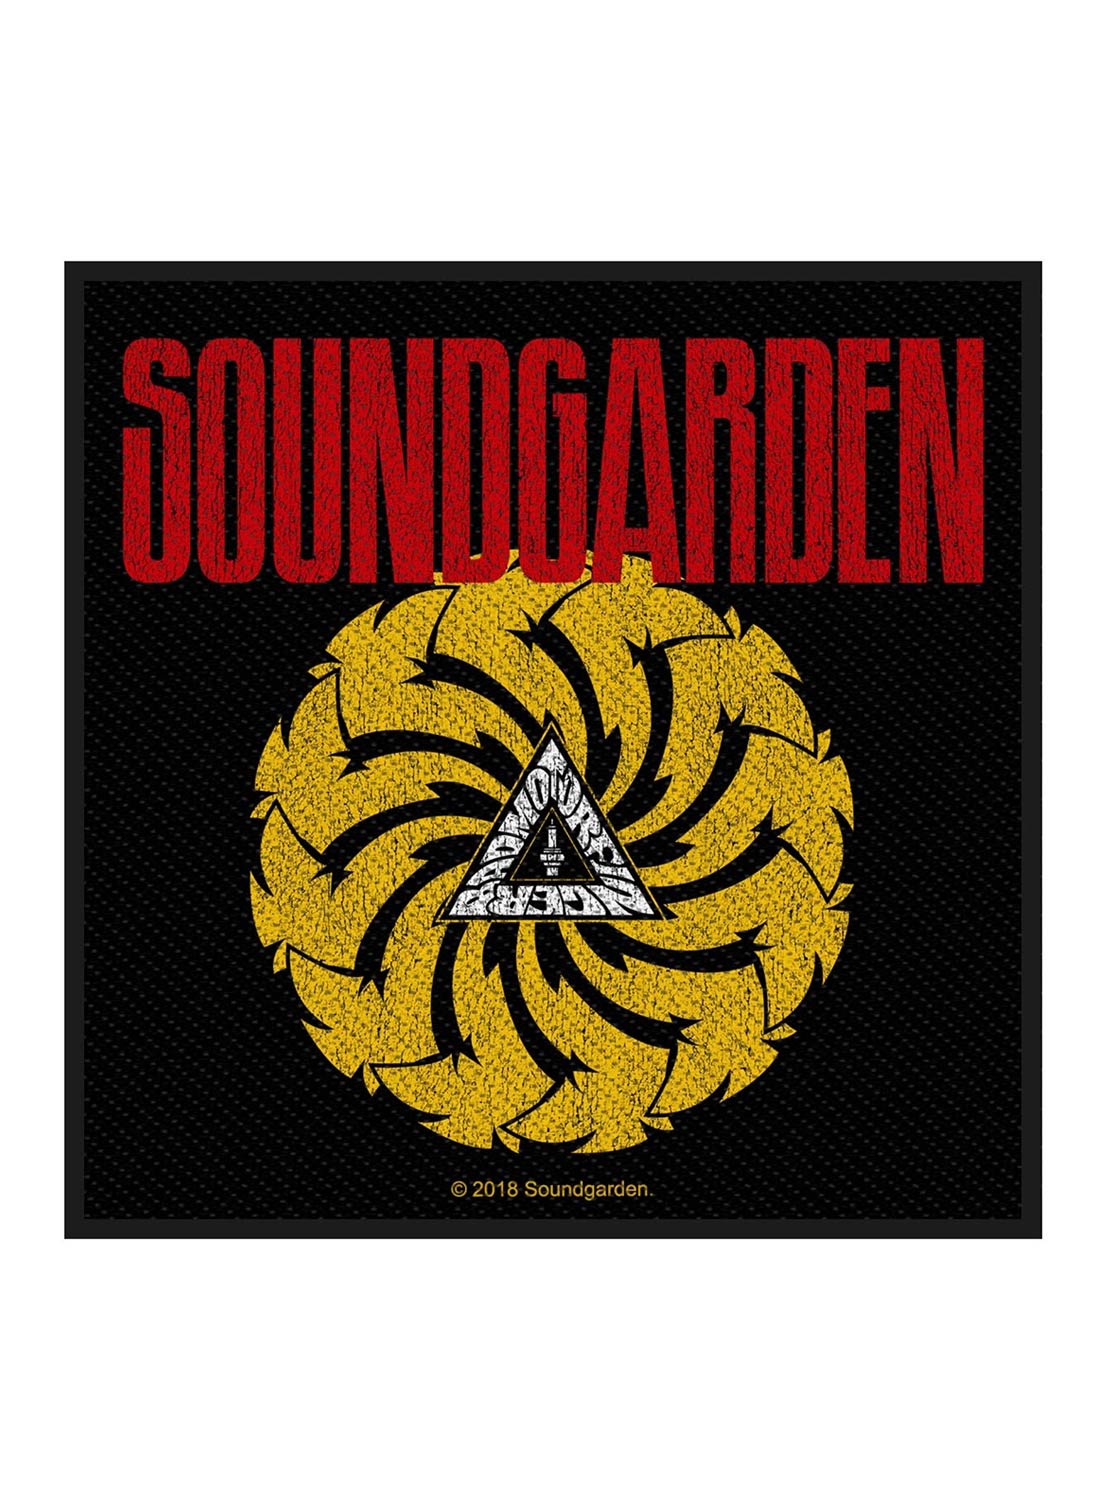 Soundgarden Bad motorfinger Patch